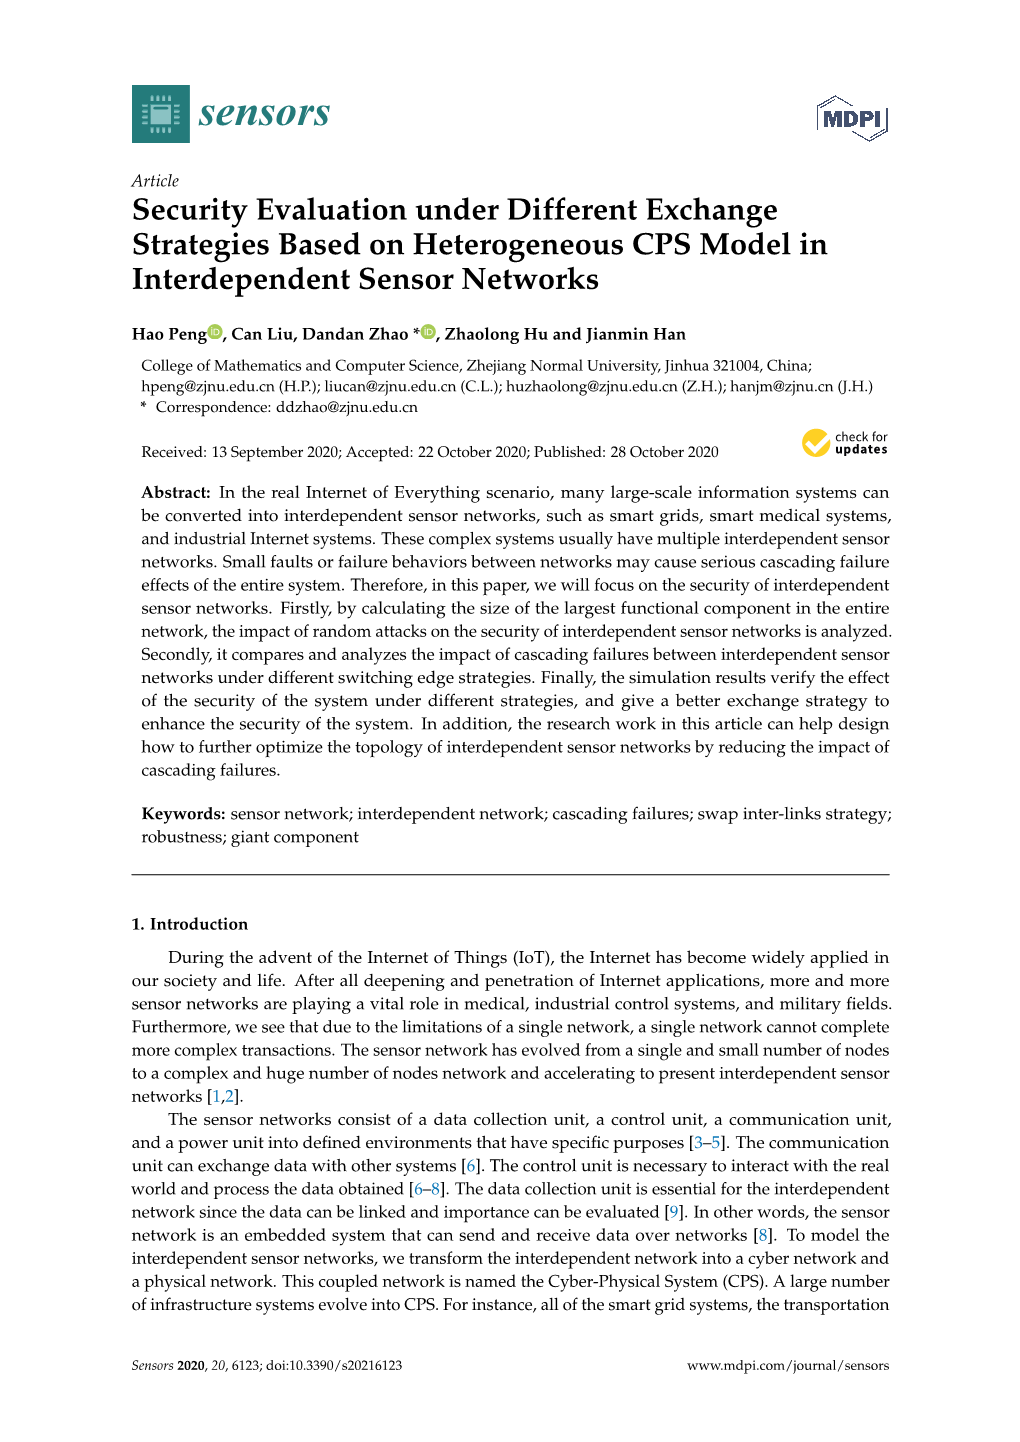 Security Evaluation Under Different Exchange Strategies Based on Heterogeneous CPS Model in Interdependent Sensor Networks